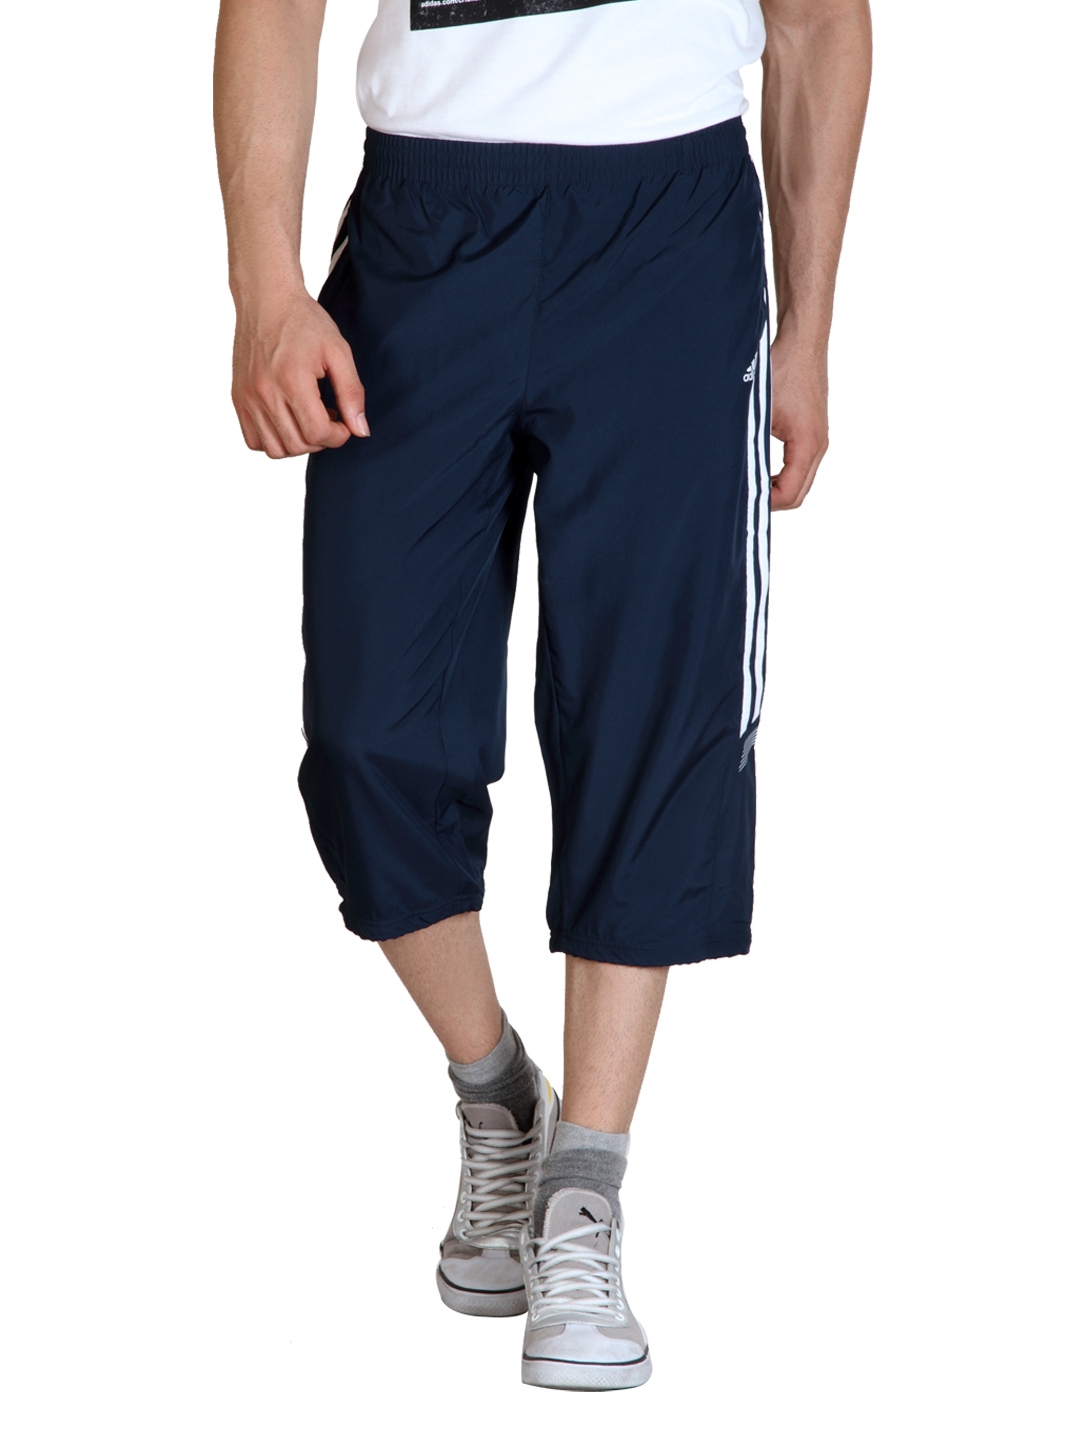 Buy Black Shorts  34ths for Men by VAN HEUSEN Online  Ajiocom